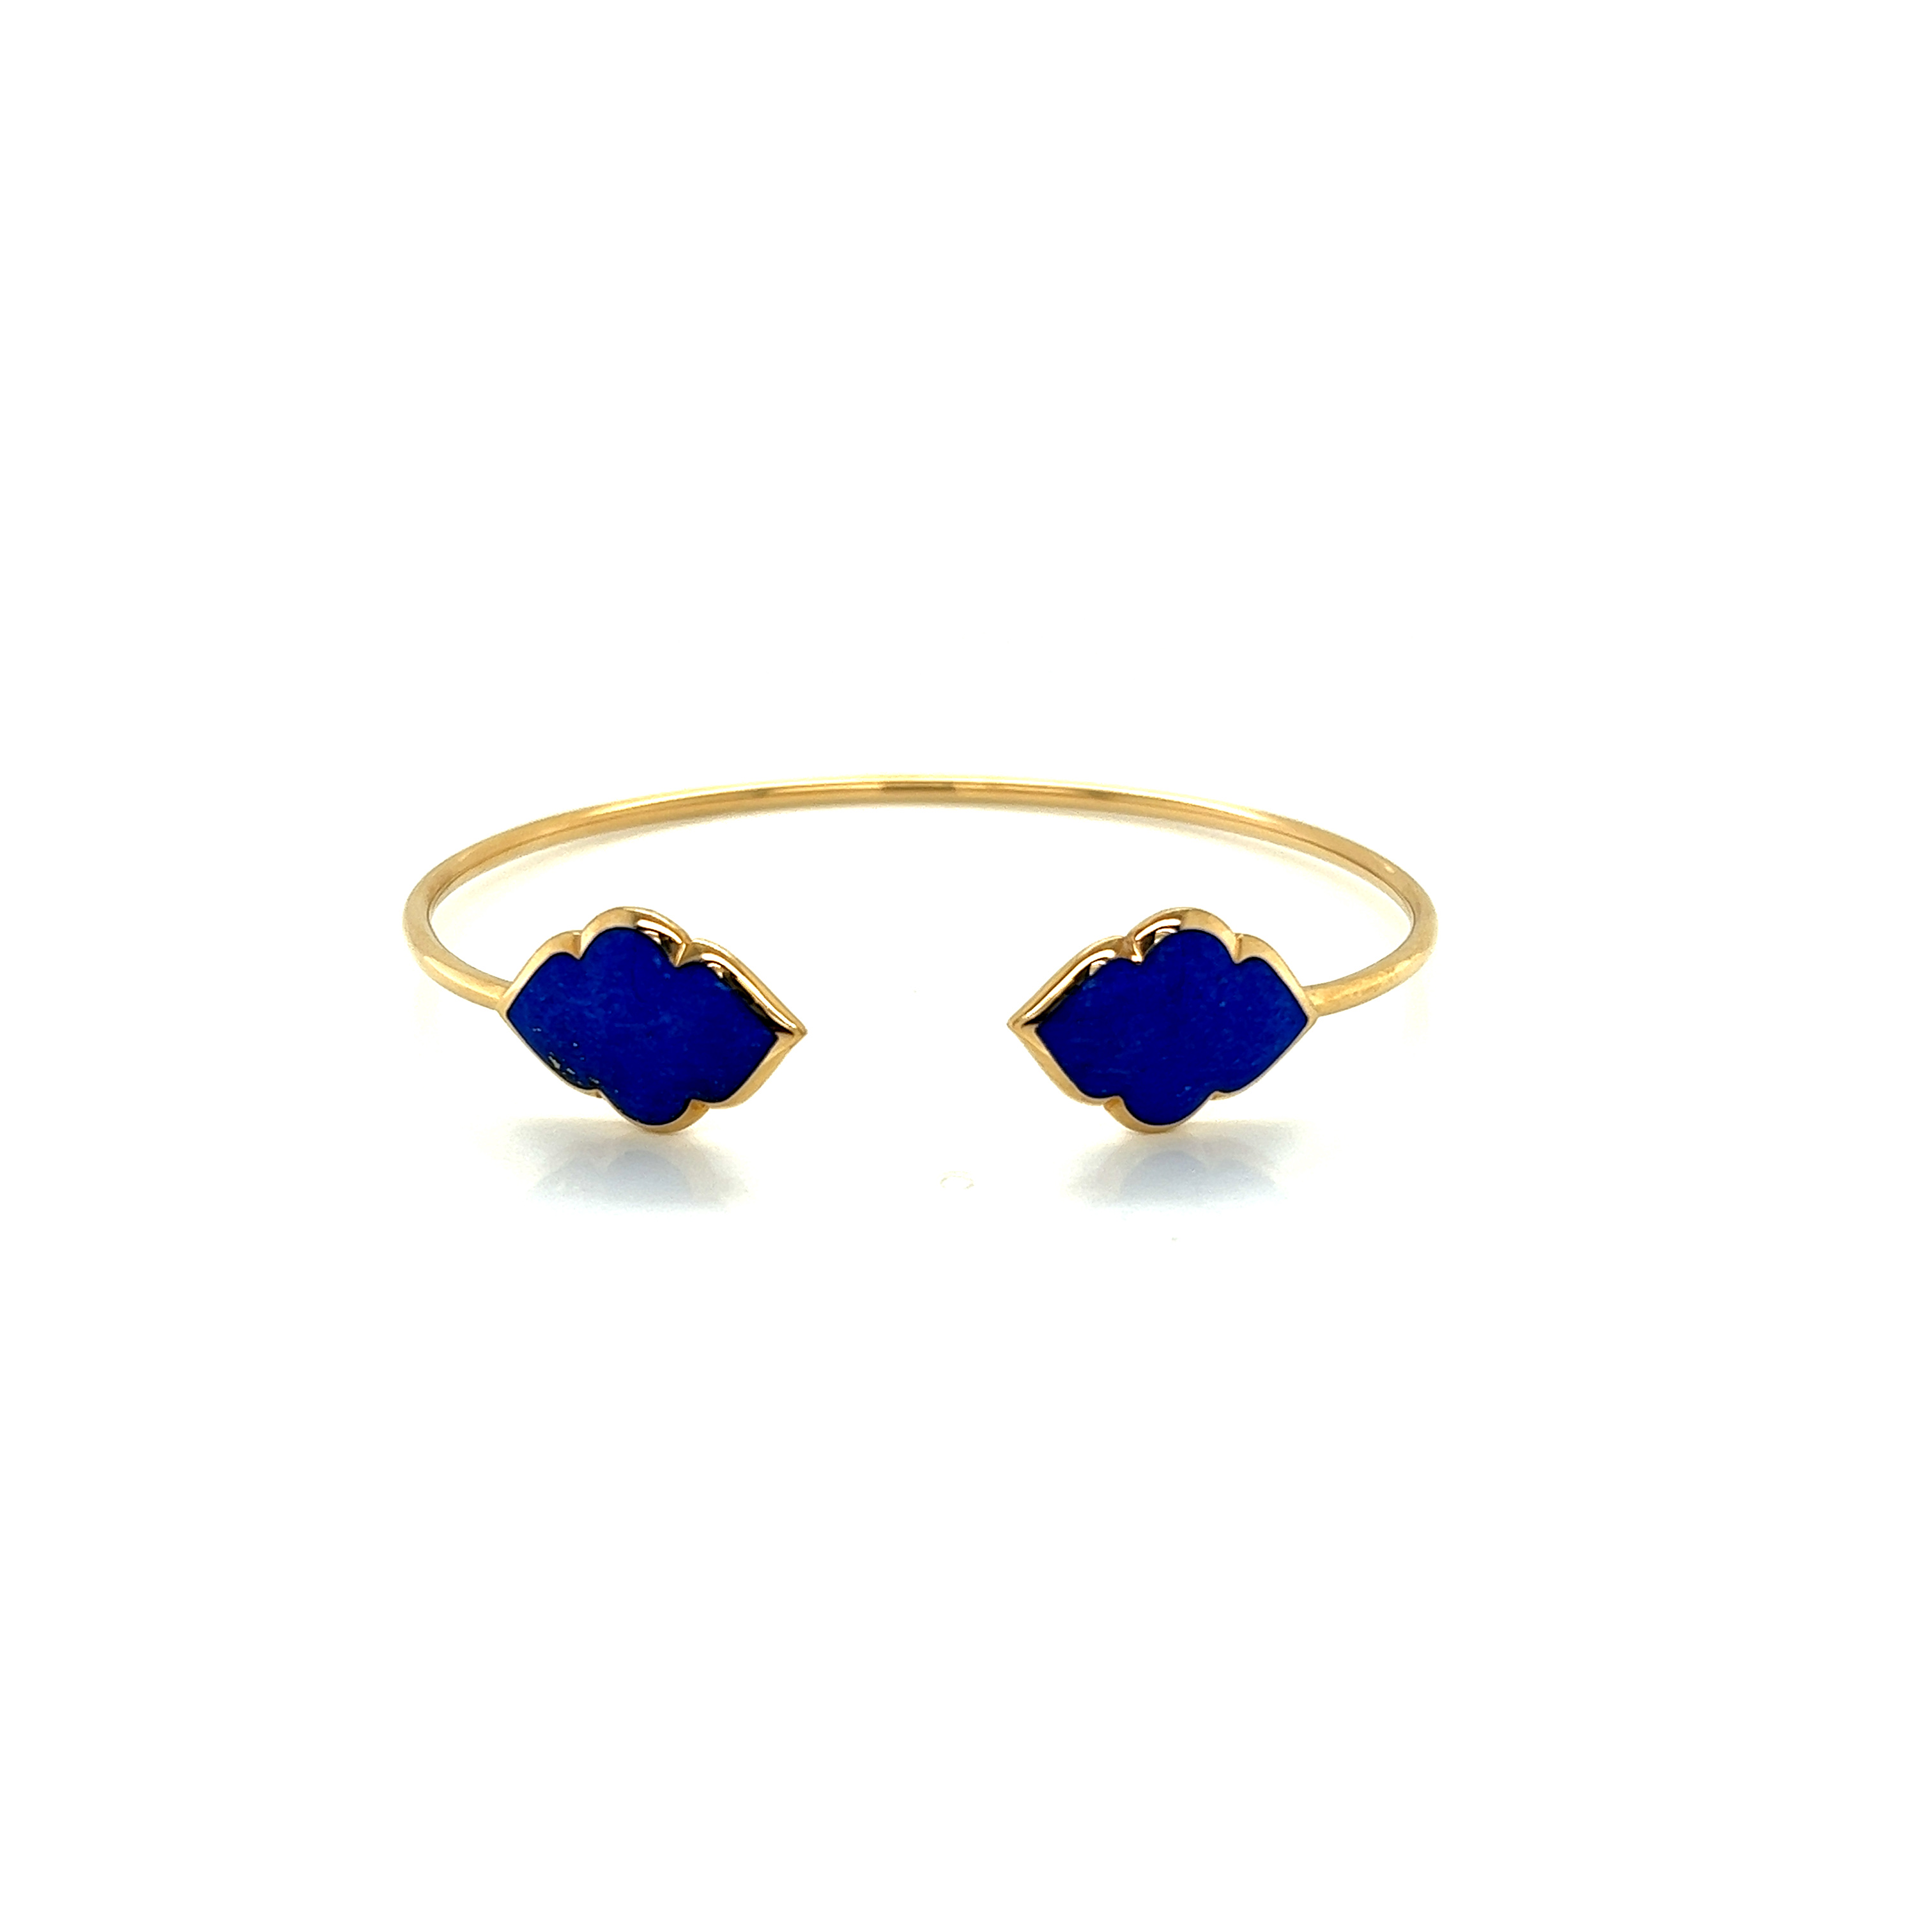 14 Karat yellow gold Cuff Bracele with lapis lazuli Inlay